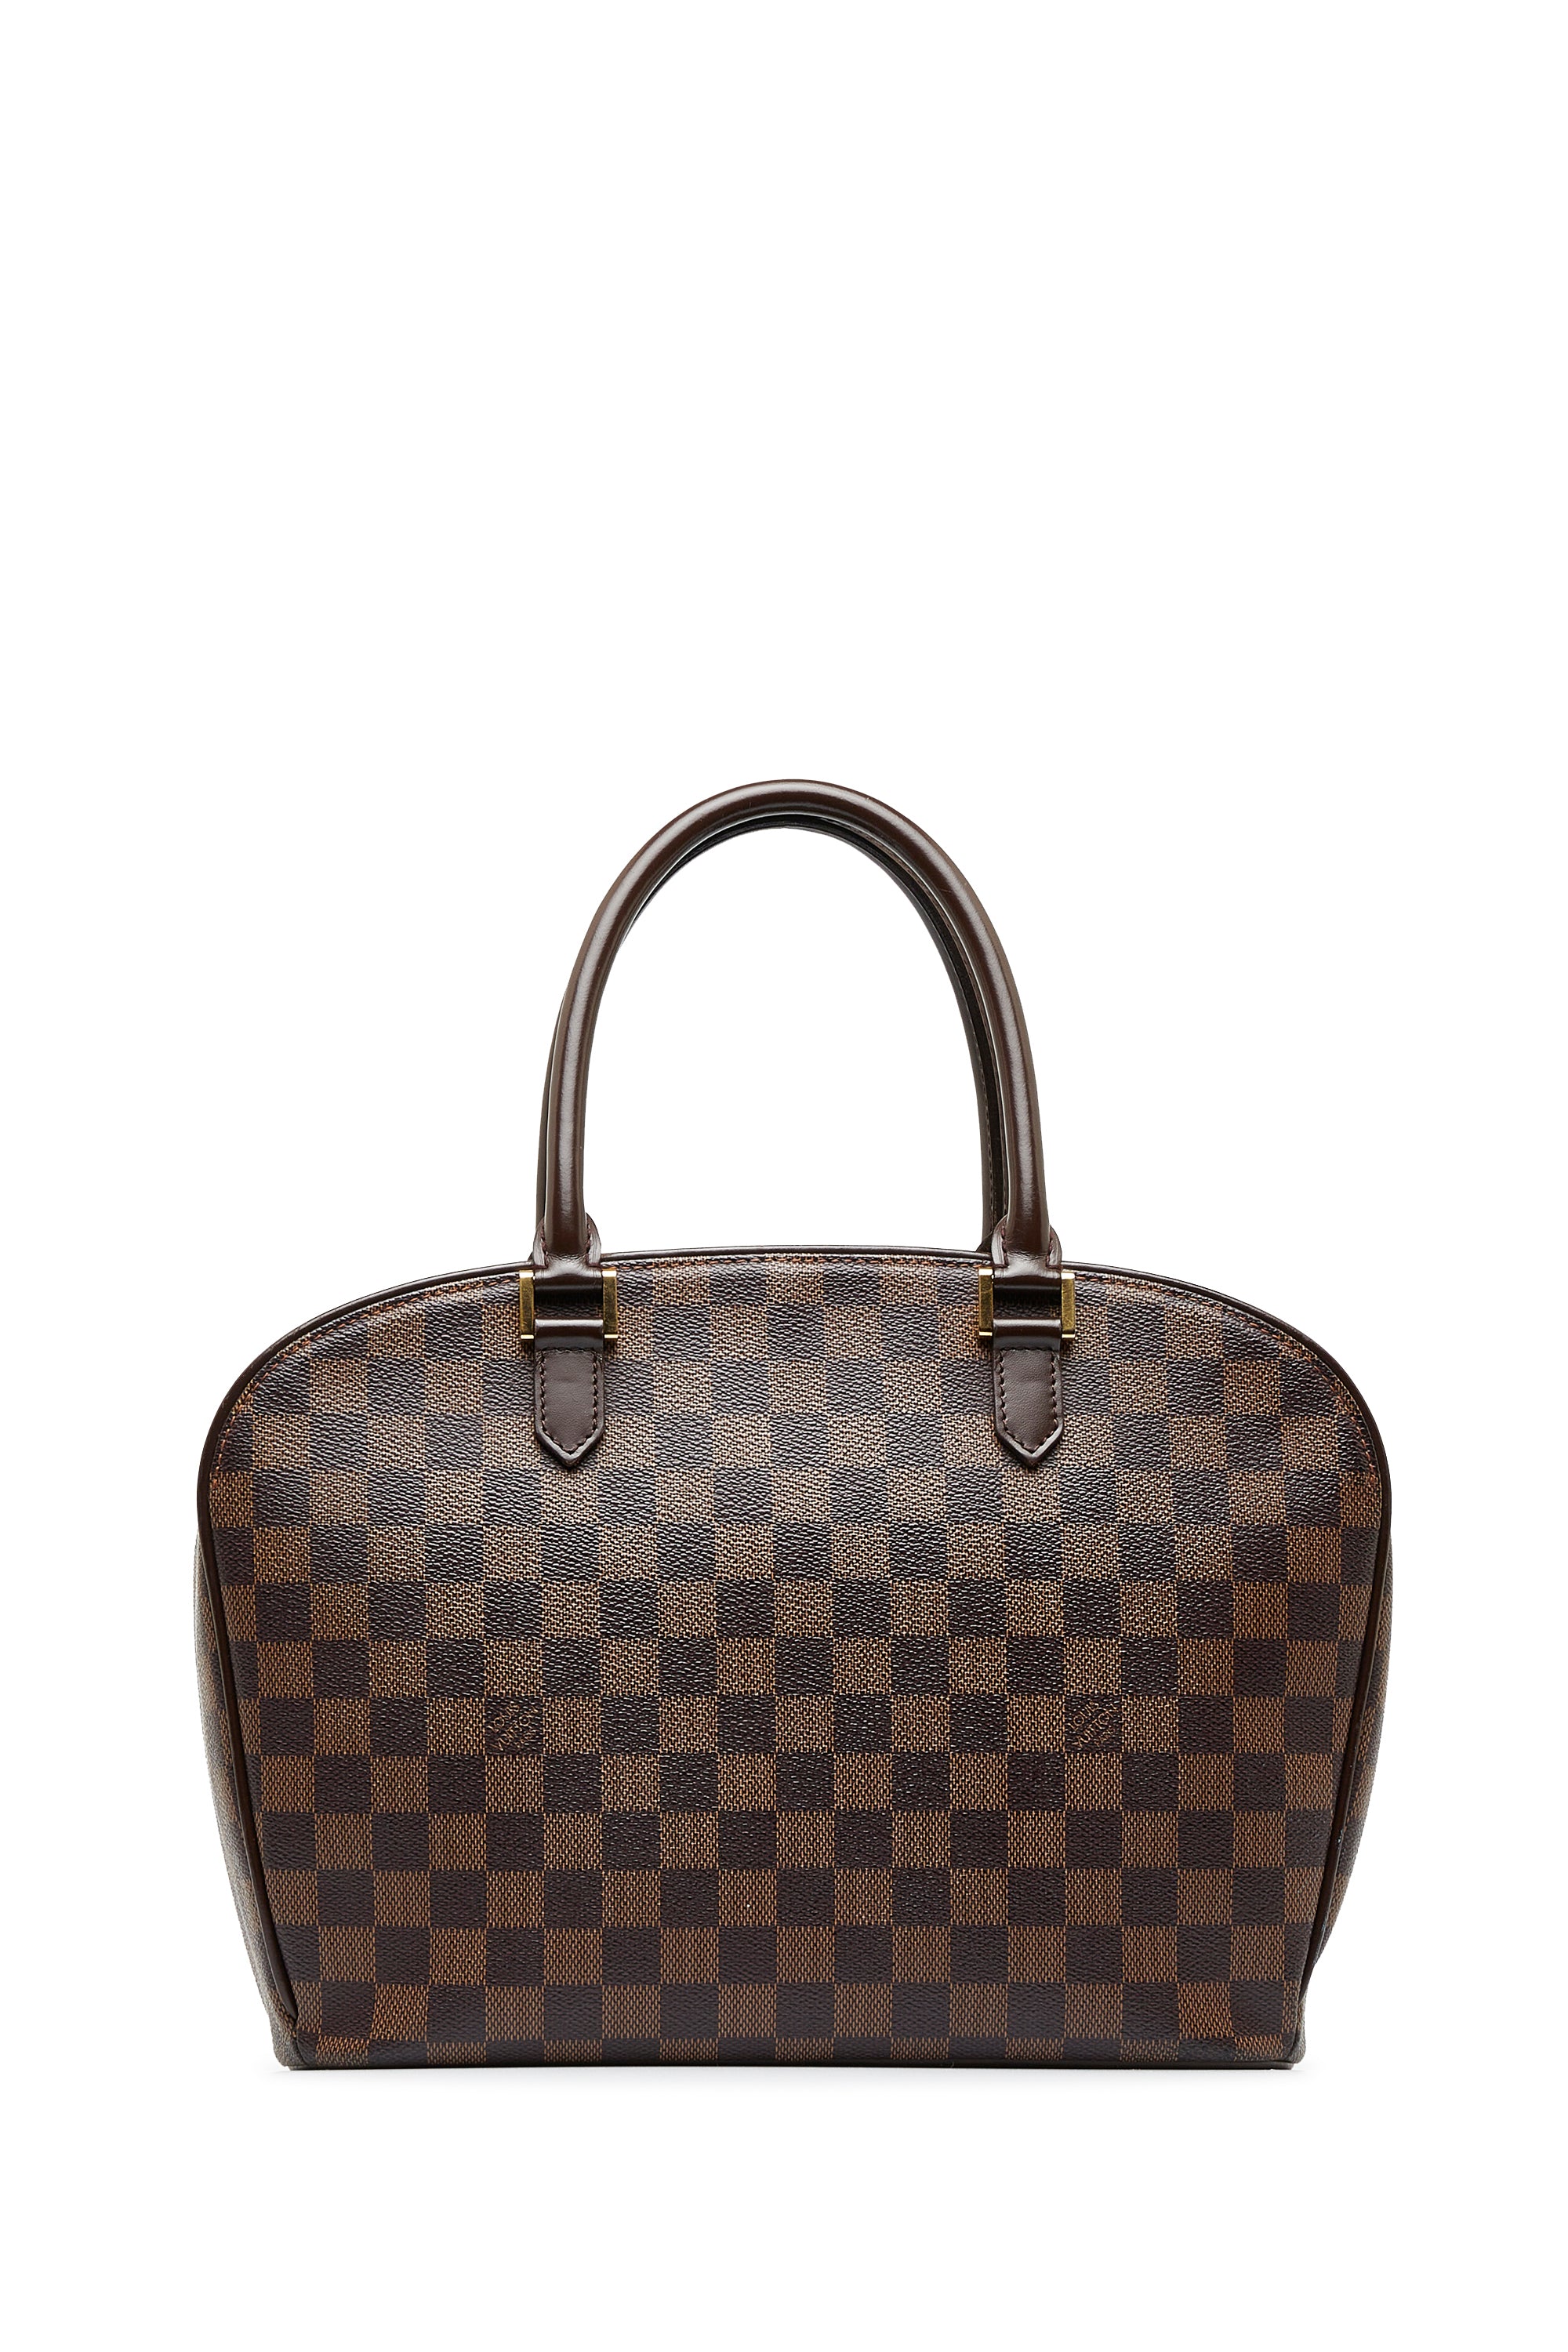 Authentic Louis Vuitton Damier Ebene Sarria Leather Handbag Purse Classic  Check